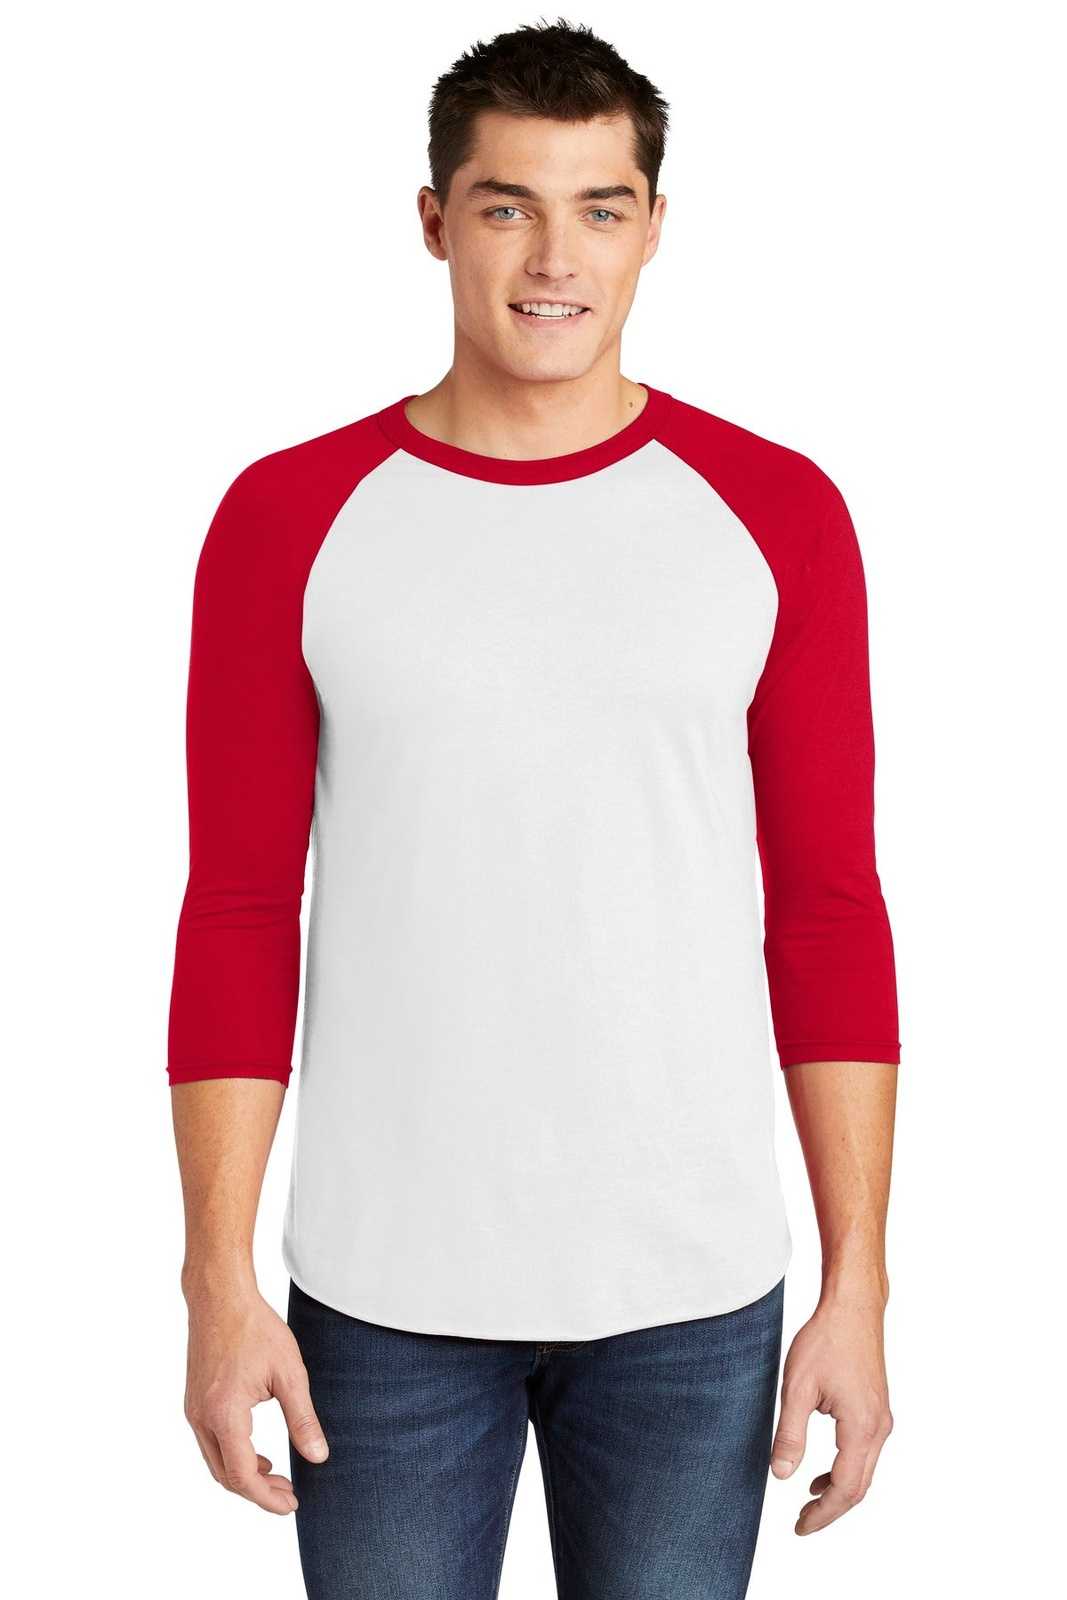 American Apparel BB453W Poly-Cotton 3/4-Sleeve Raglan T-Shirt - White Red - HIT a Double